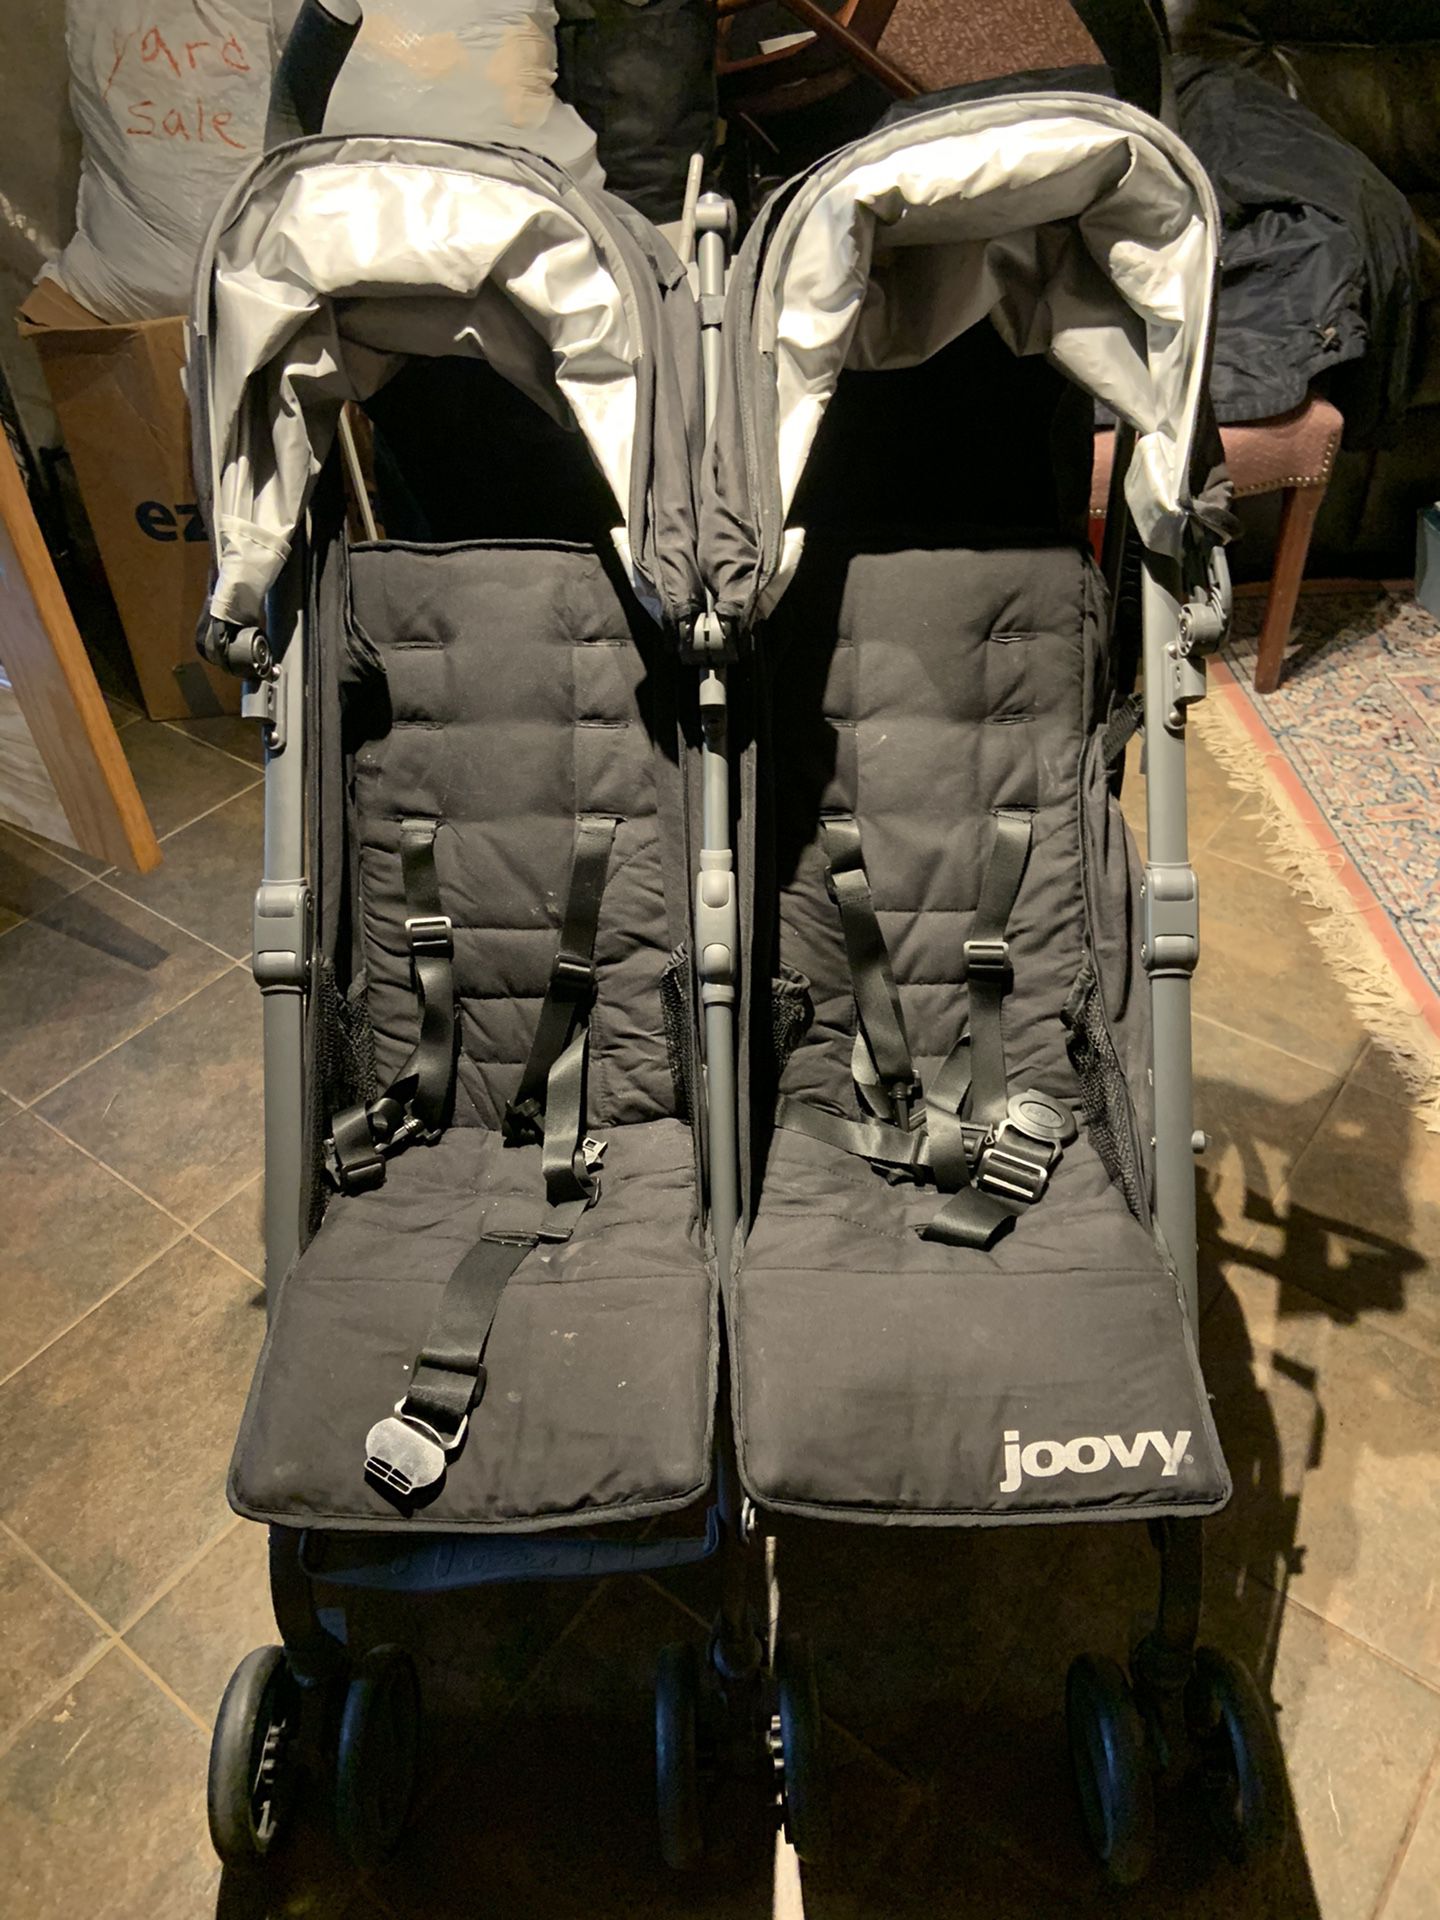 Joovy double stroller